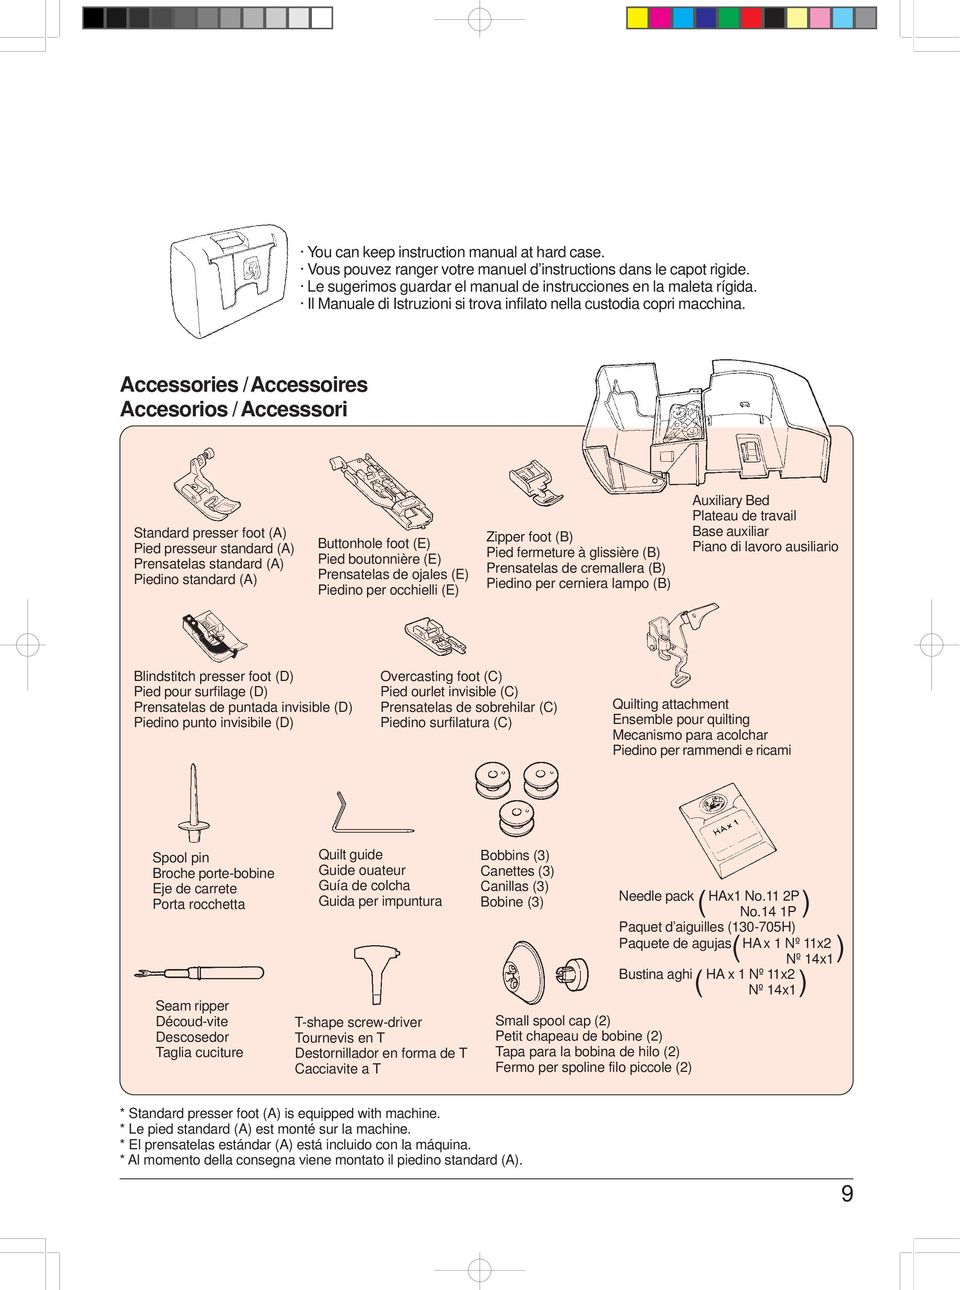 Accessories / Accessoires Accesorios / Accesssori Standard presser foot (A) Pied presseur standard (A) Prensatelas standard (A) Piedino standard (A) Buttonhole foot (E) Pied boutonnière (E)